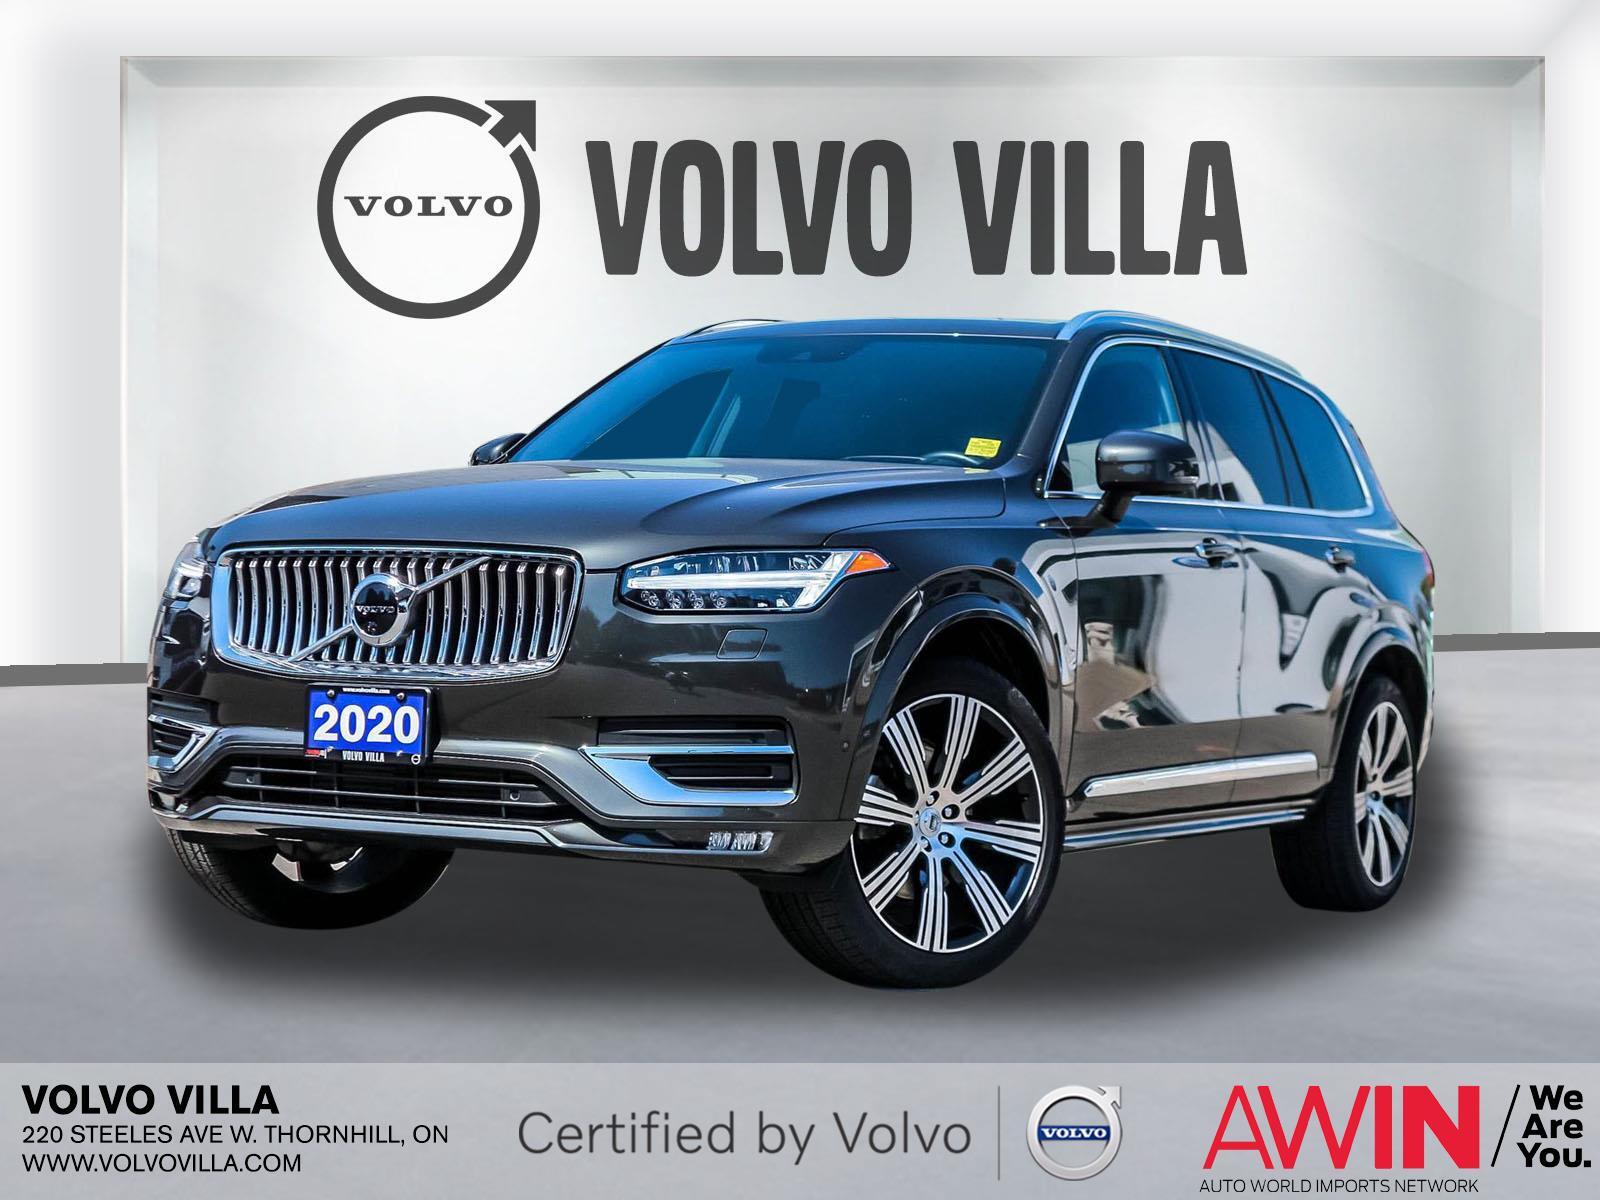 2020 Volvo XC90 T6 AWD Inscription (7-Seat)